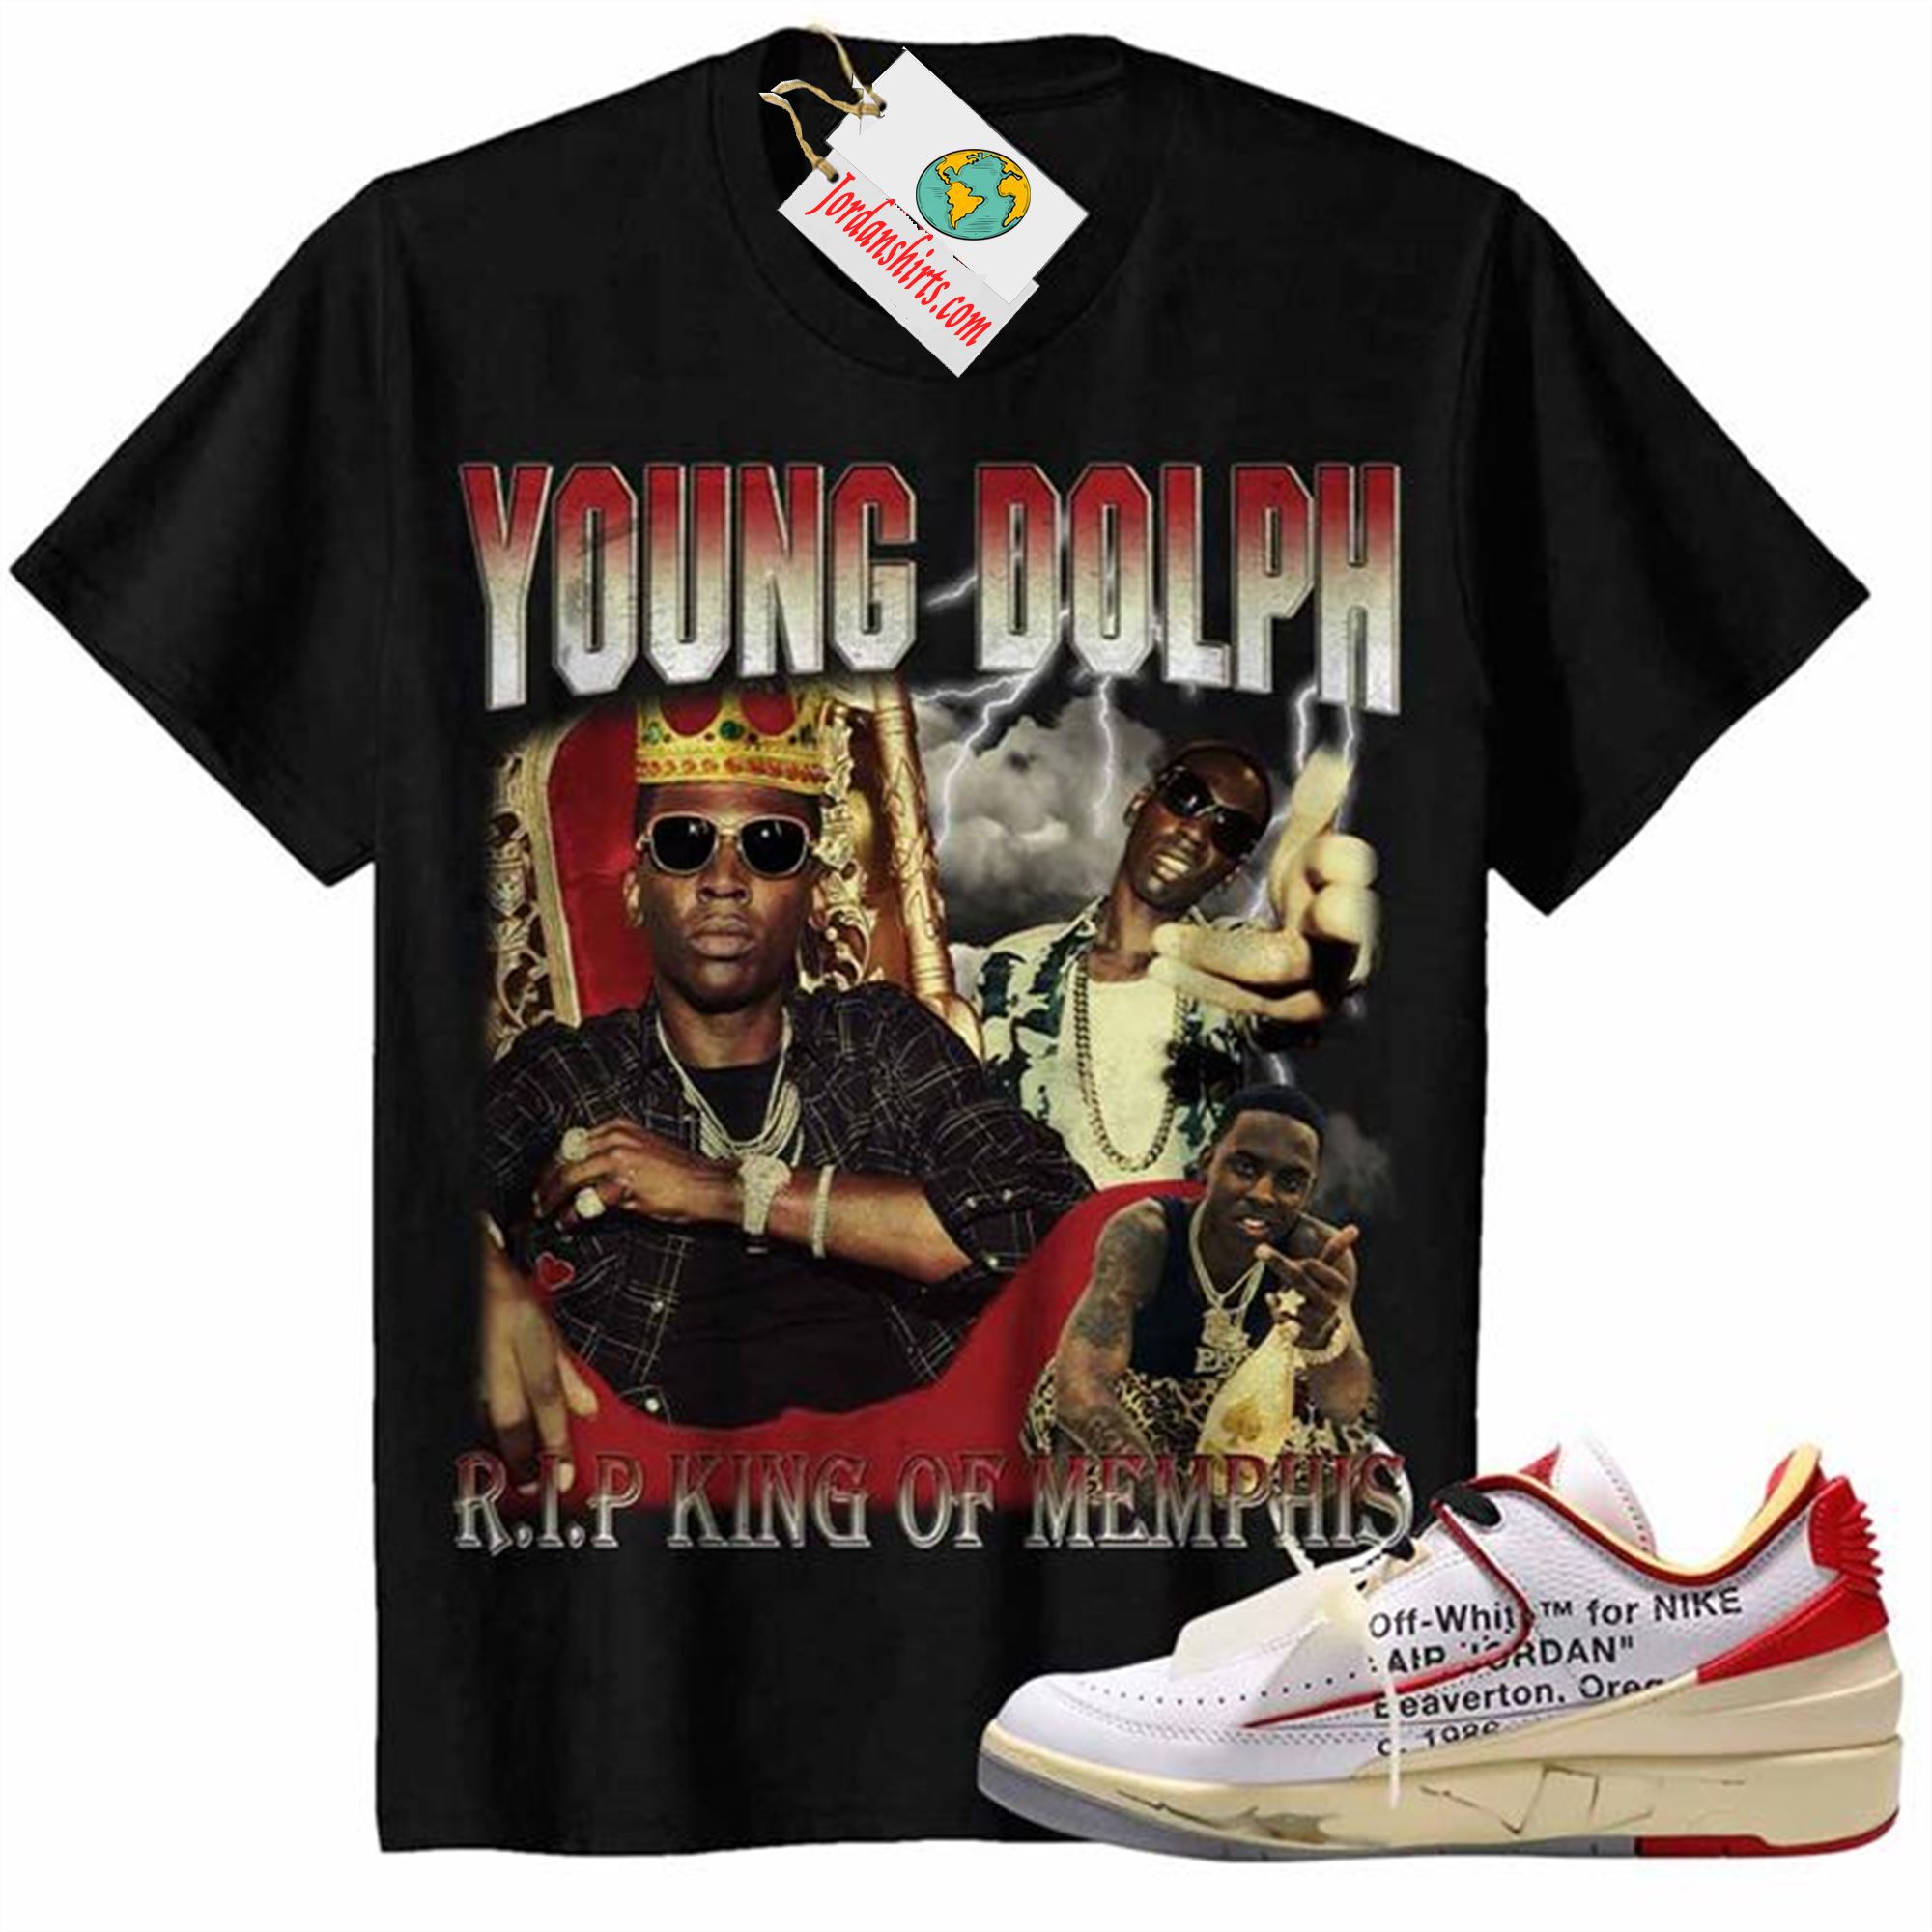 Jordan 2 Shirt, Rip King Of Memphis Young Dolph Vintage Black Air Jordan 2 Low White Red Off-white 2s-trungten-x4w8u Full Size Up To 5xl